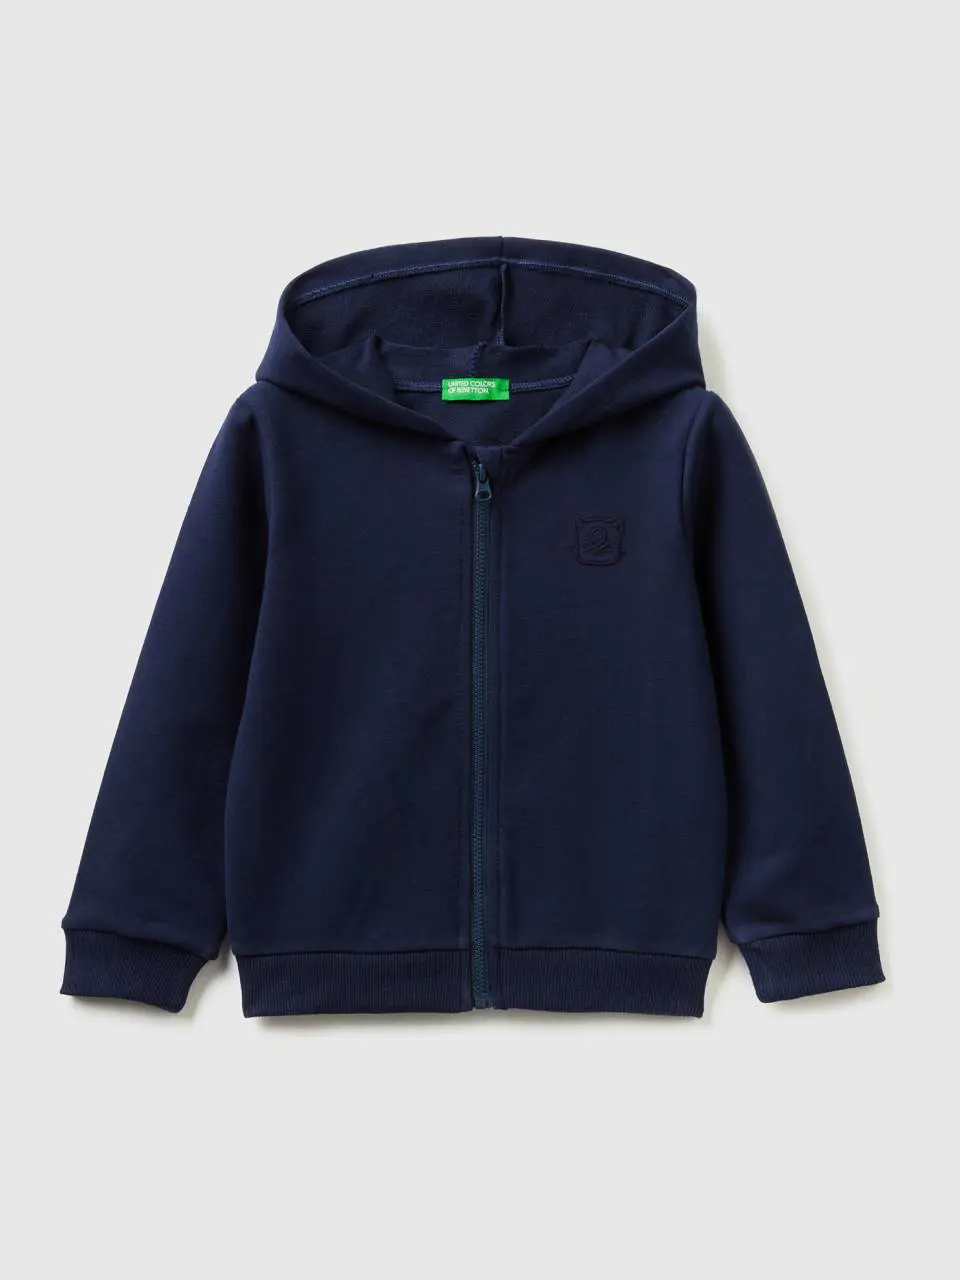 Benetton warm sweatshirt with zip and embroidered logo. 1